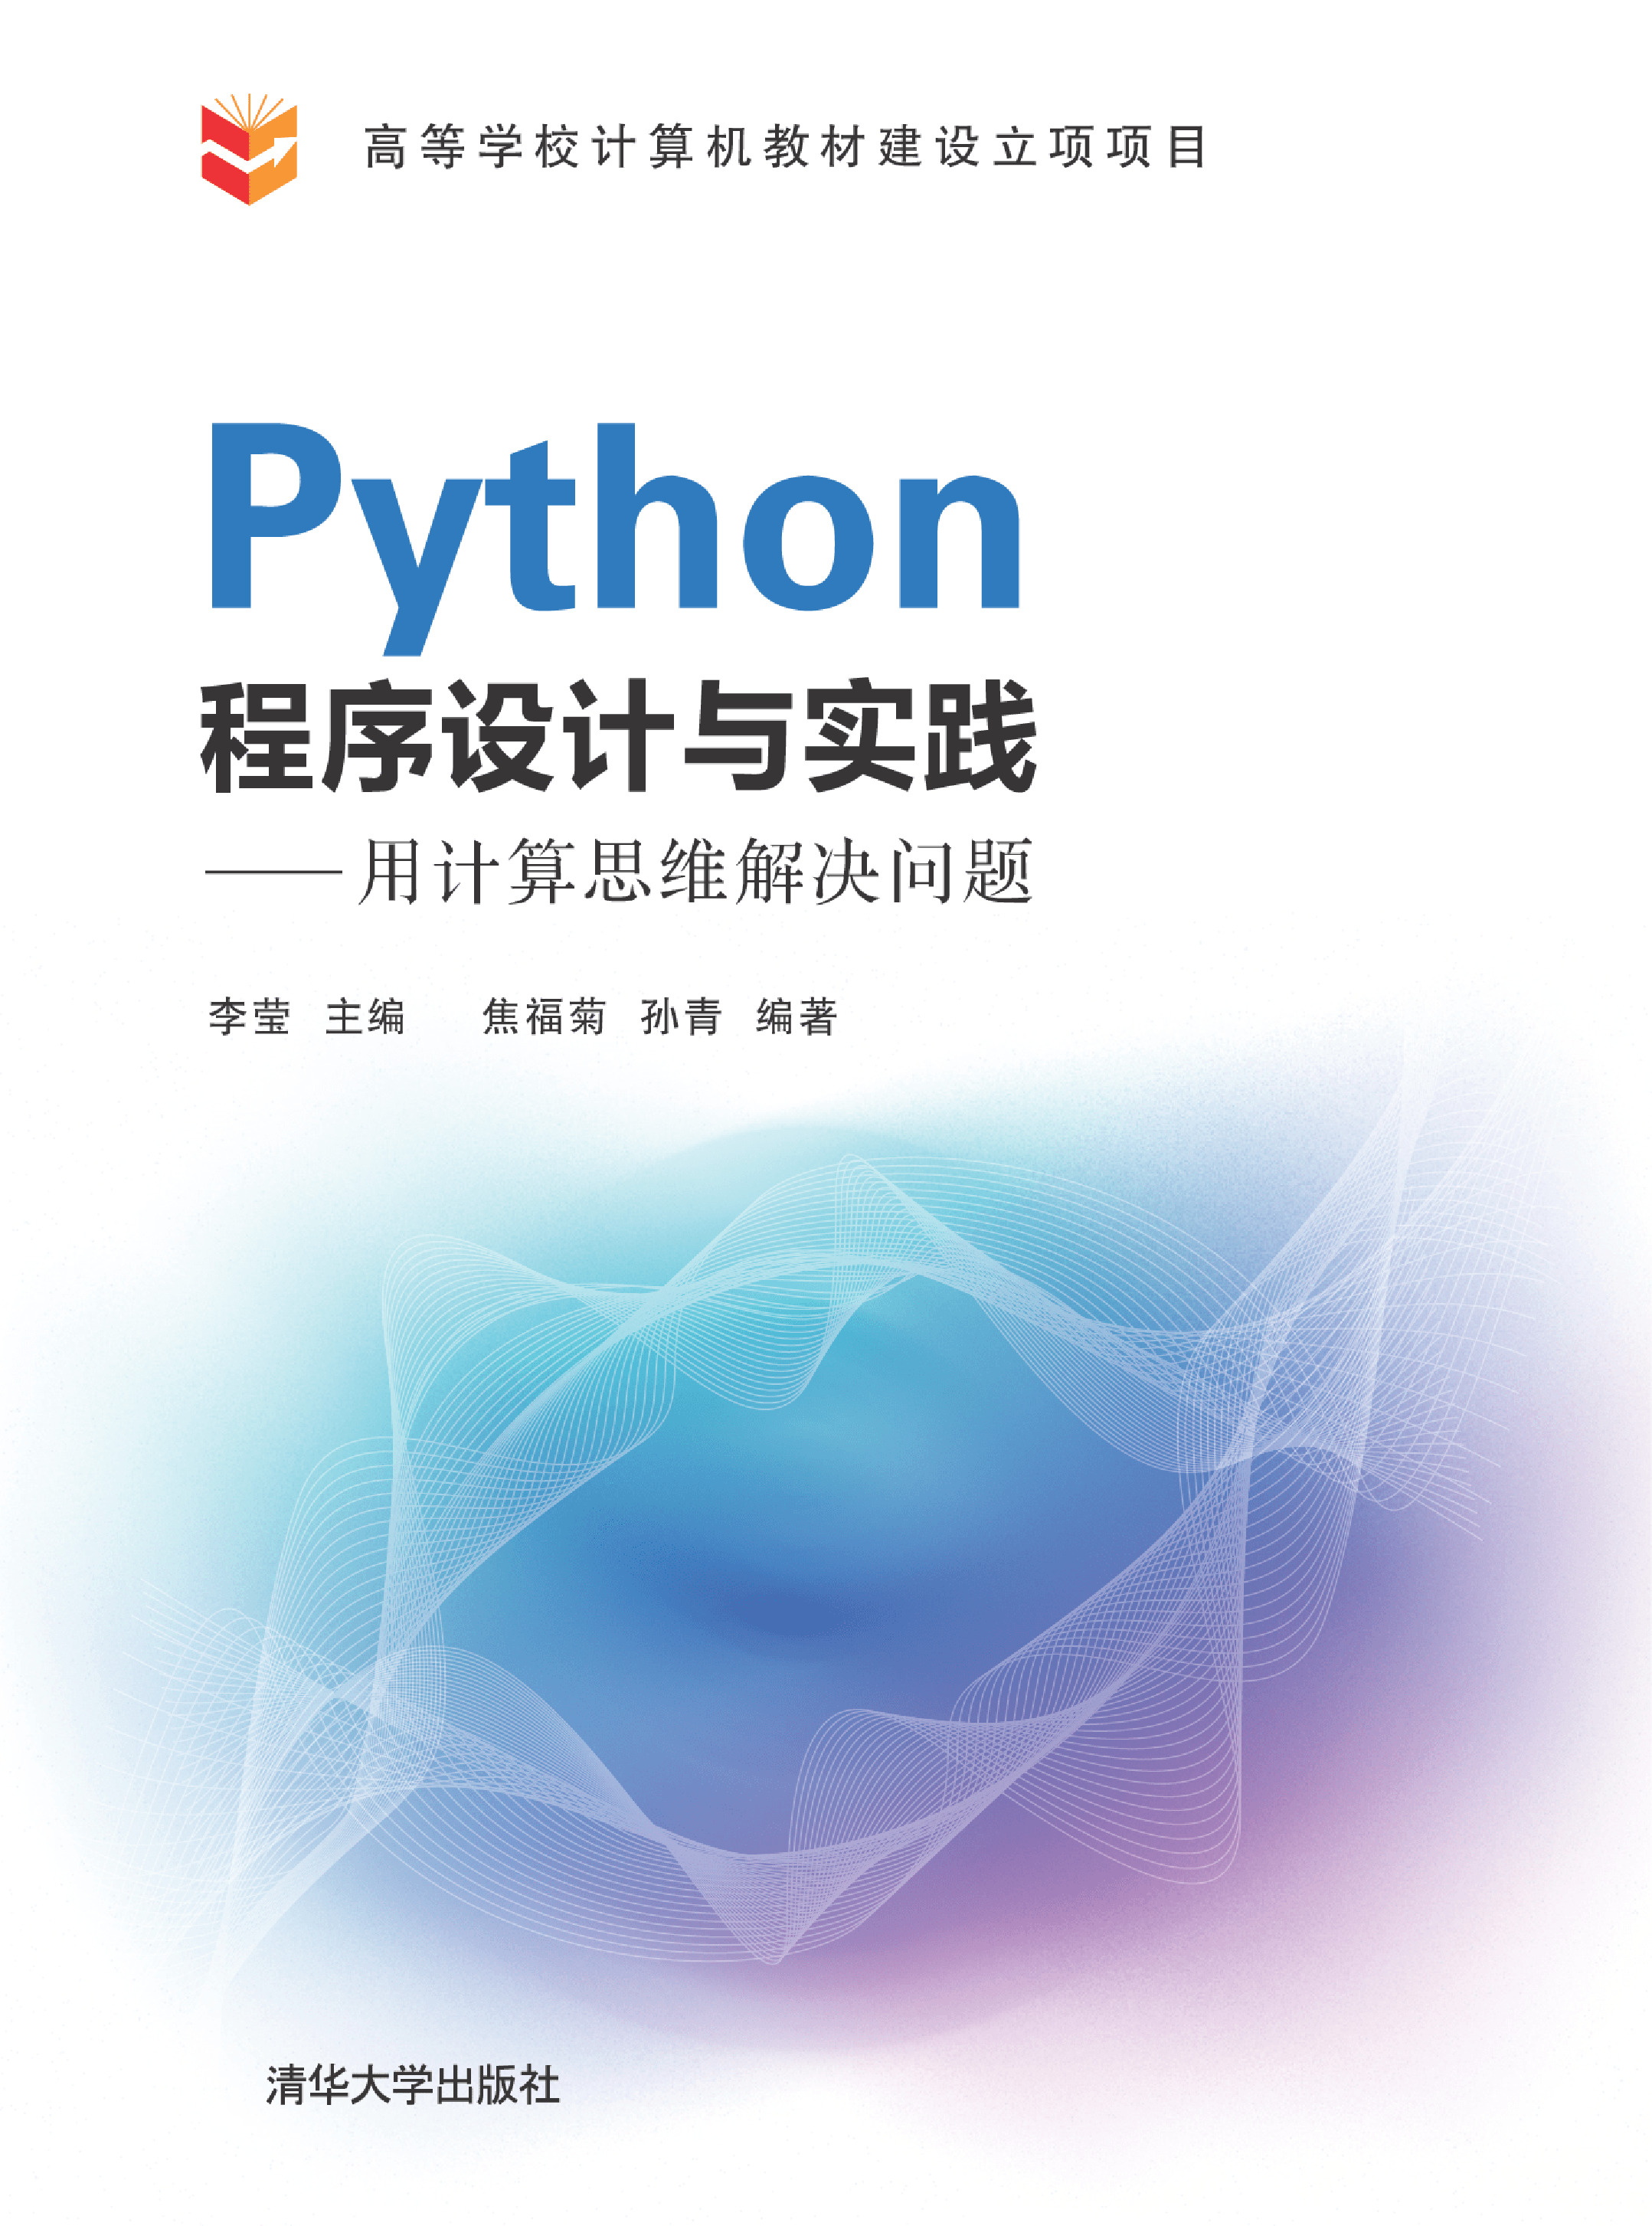 Python程序设计与实践——用计算思维解决问题